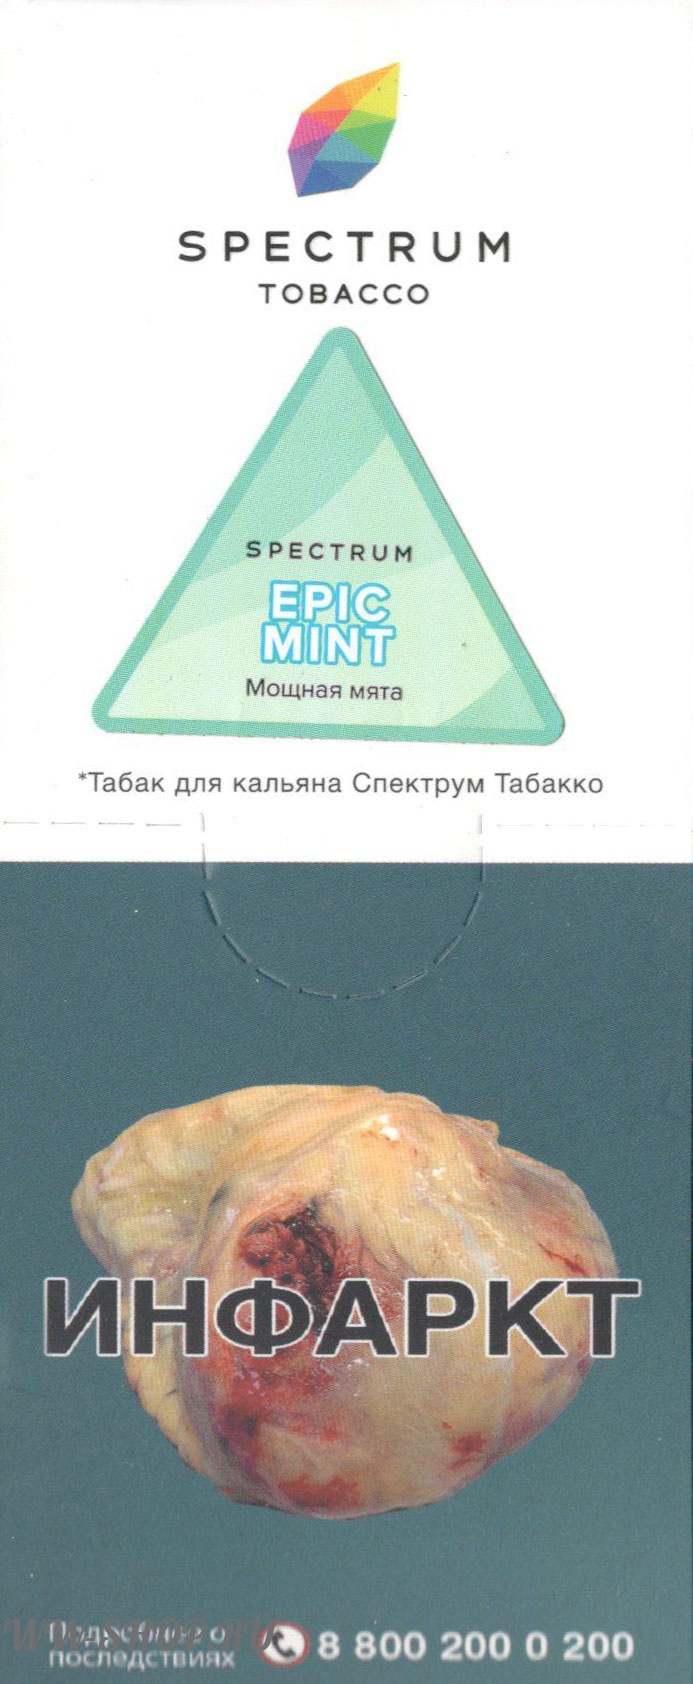 spectrum- мощная мята (epic mint) Чебоксары